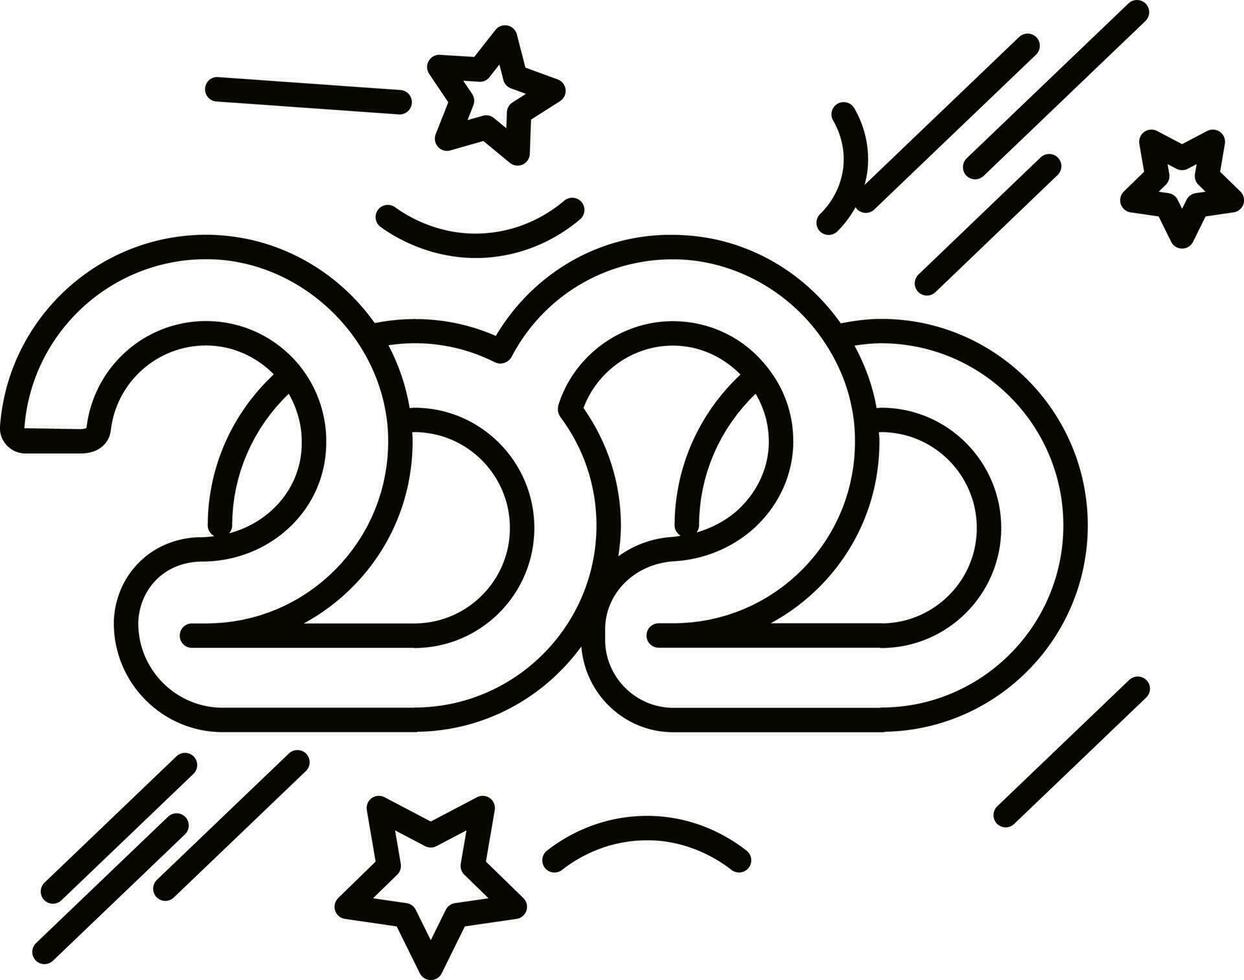 Black line art illustration of 2020 number icon. vector